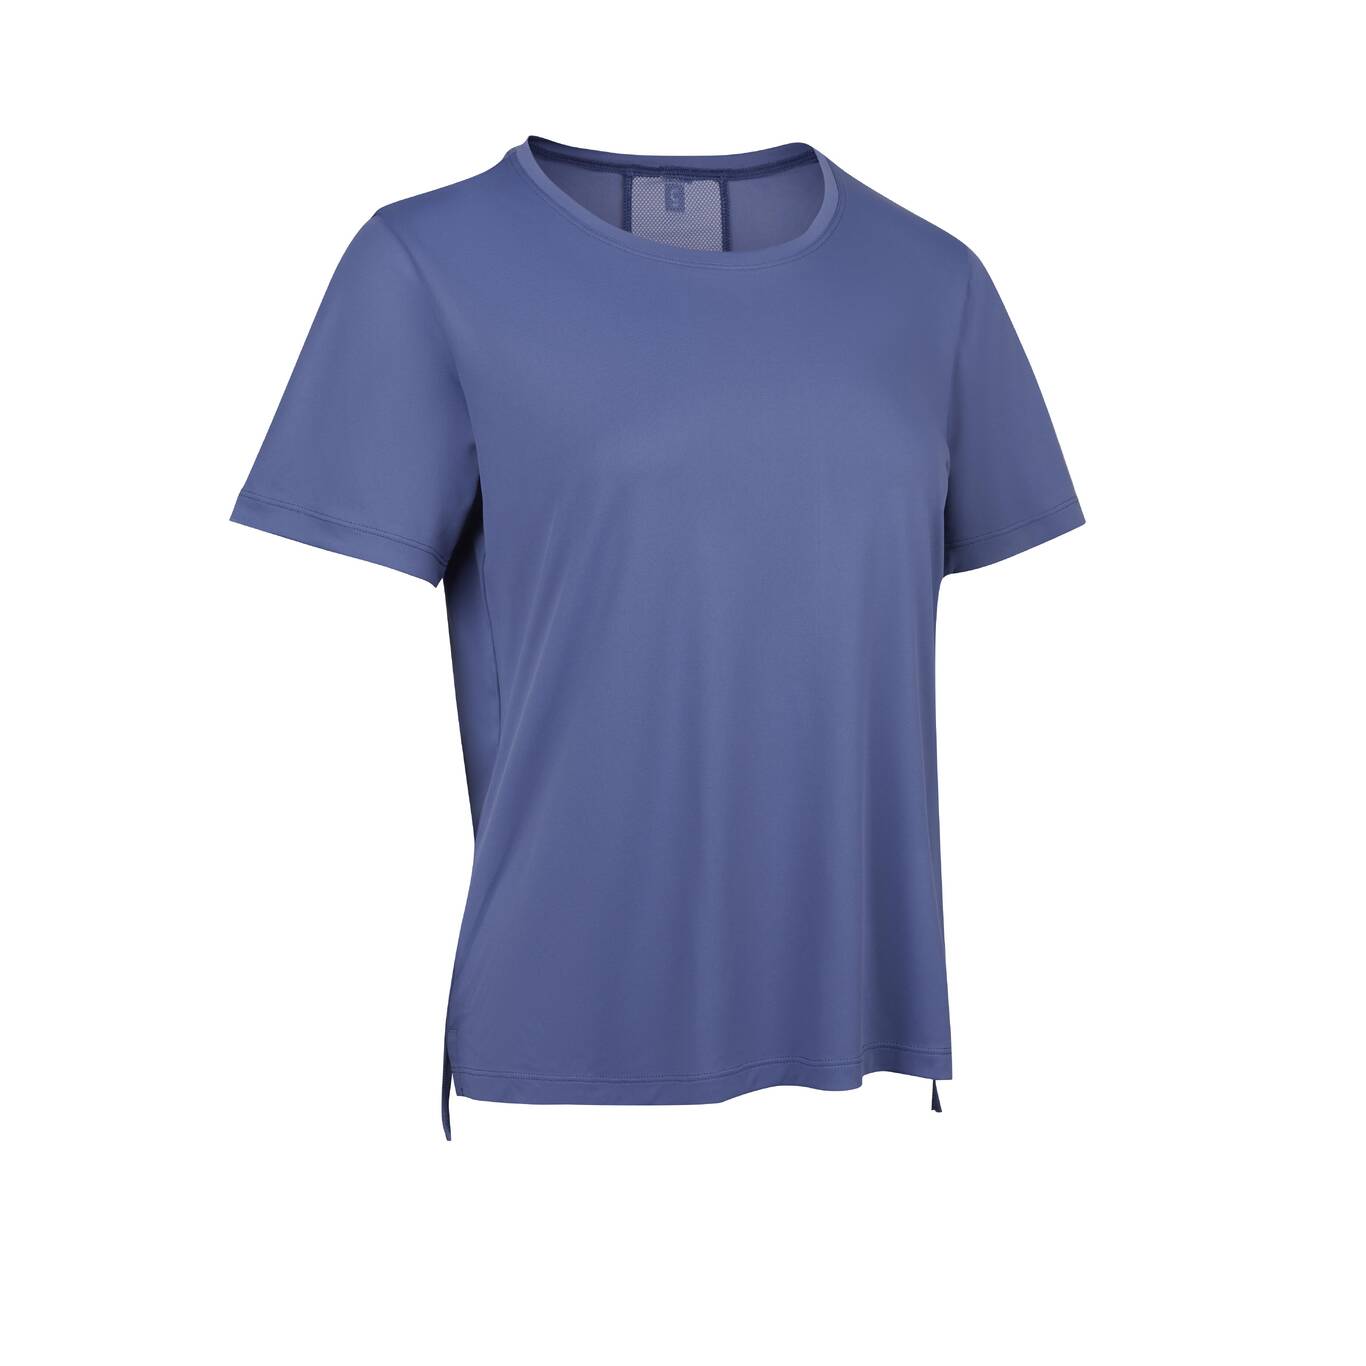 Women's Short-Sleeved Fitness Cardio T-Shirt